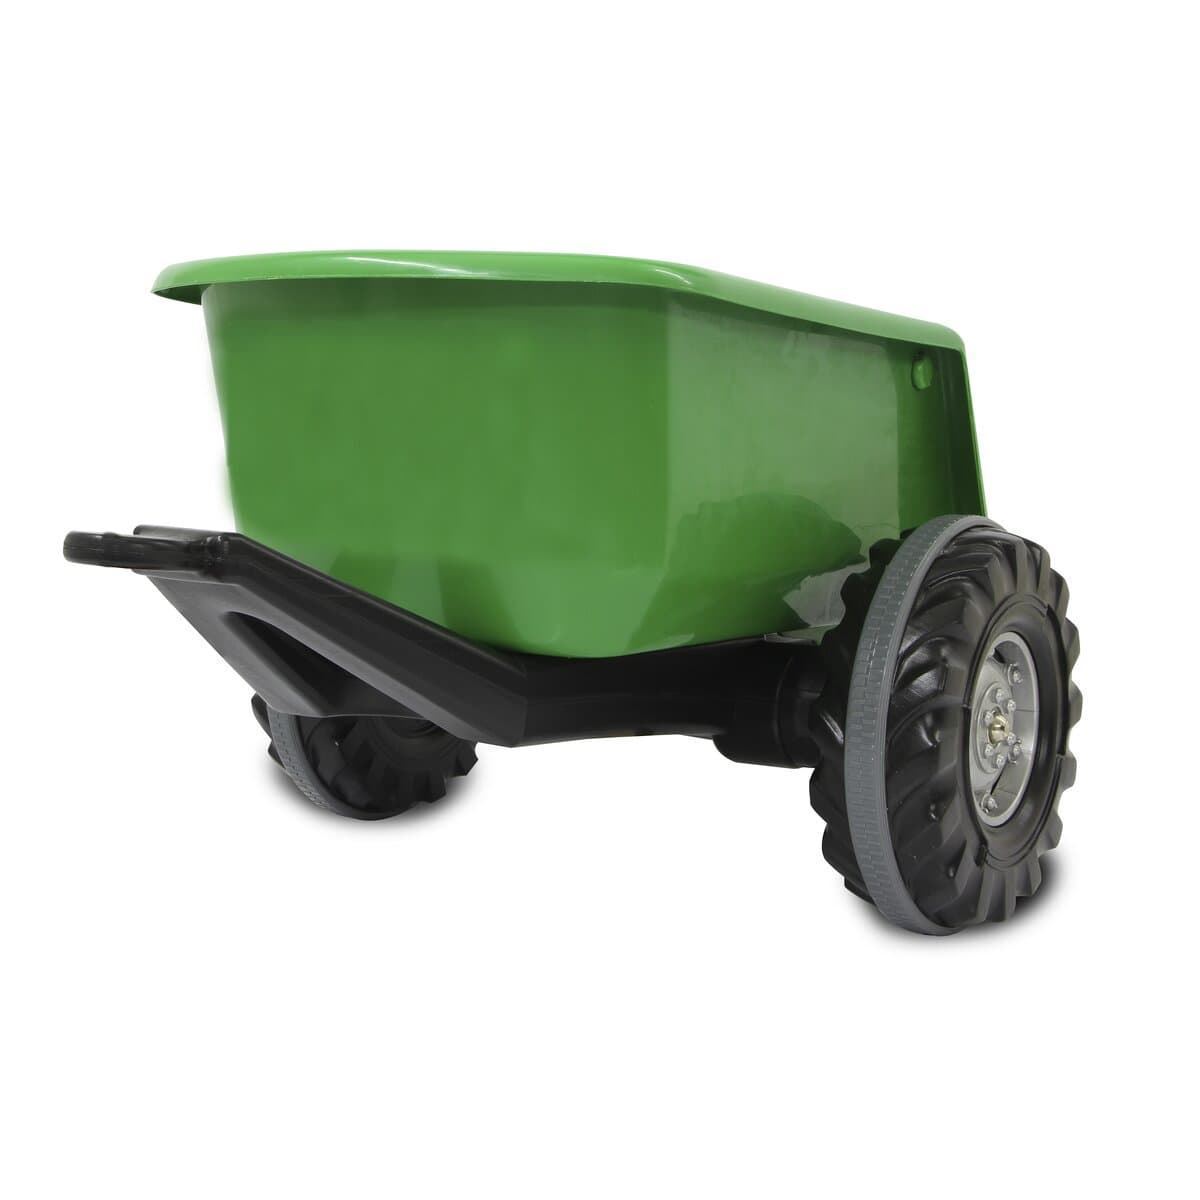 Remolque basculante para tractor de batería verde Jamara 460350 - Imagen 3